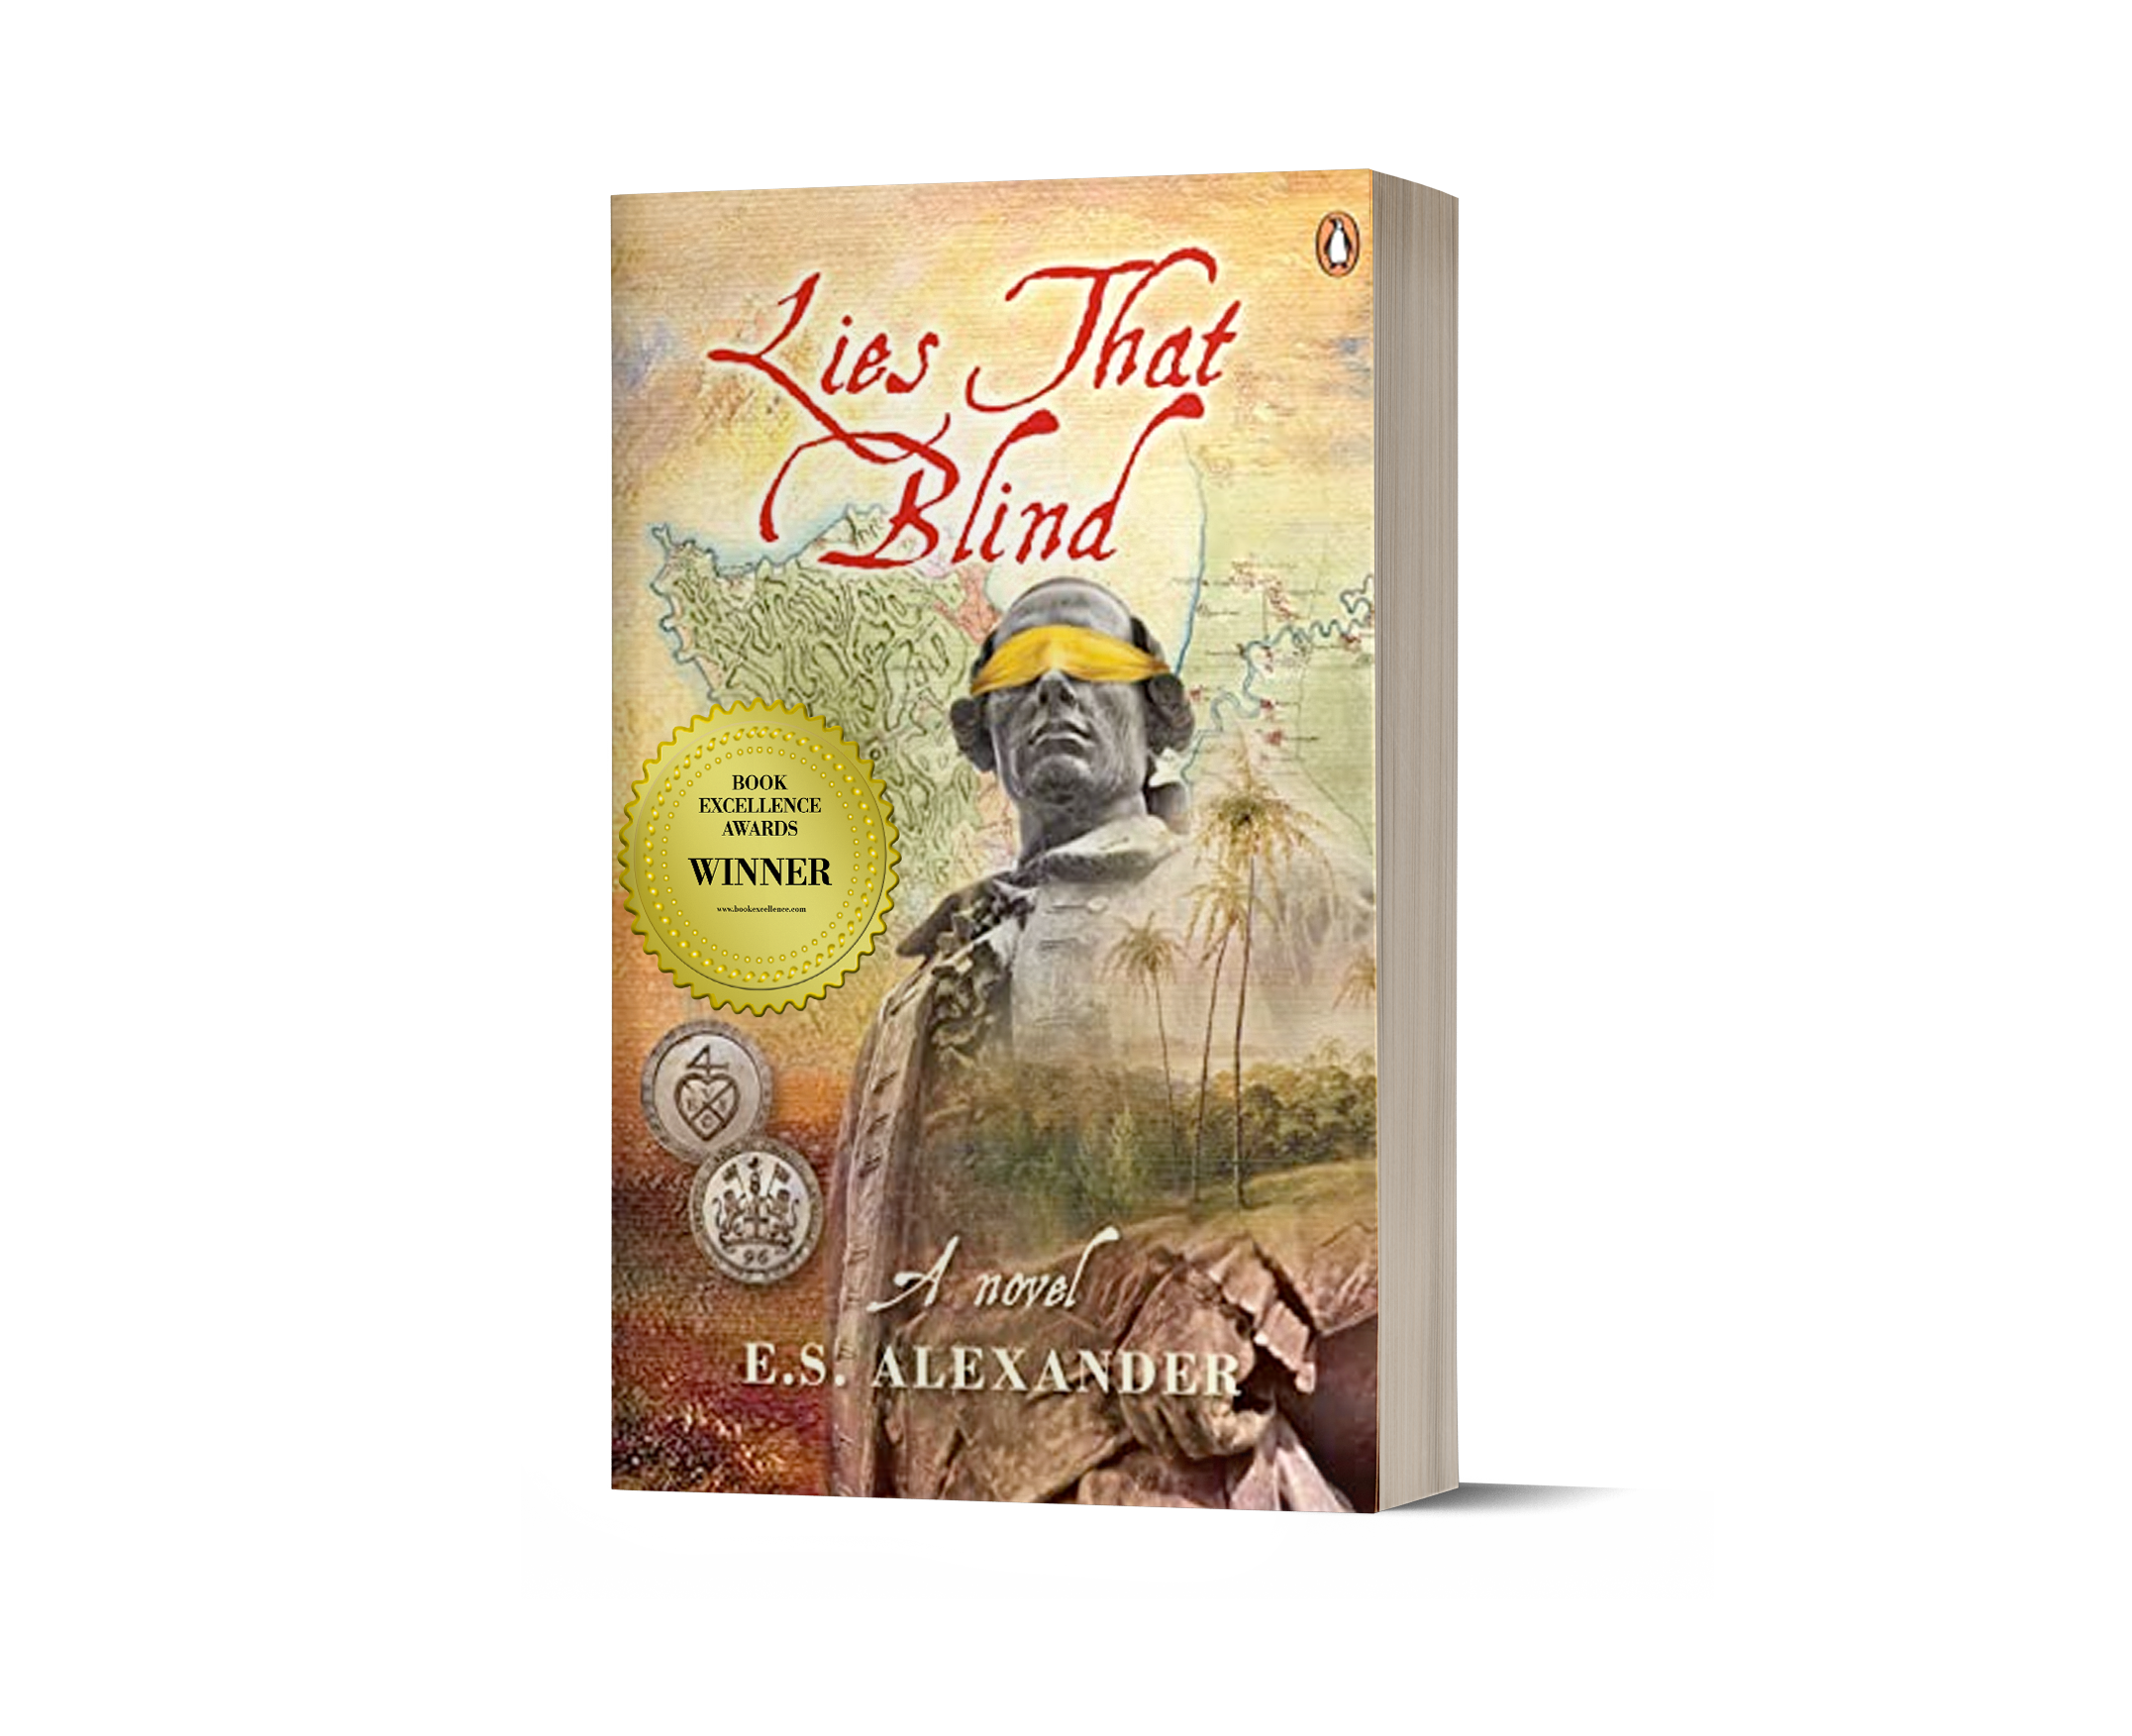 Penguin Random House’s "Lies That Blind" Named Winner in the 2022 Book Excellence Awards